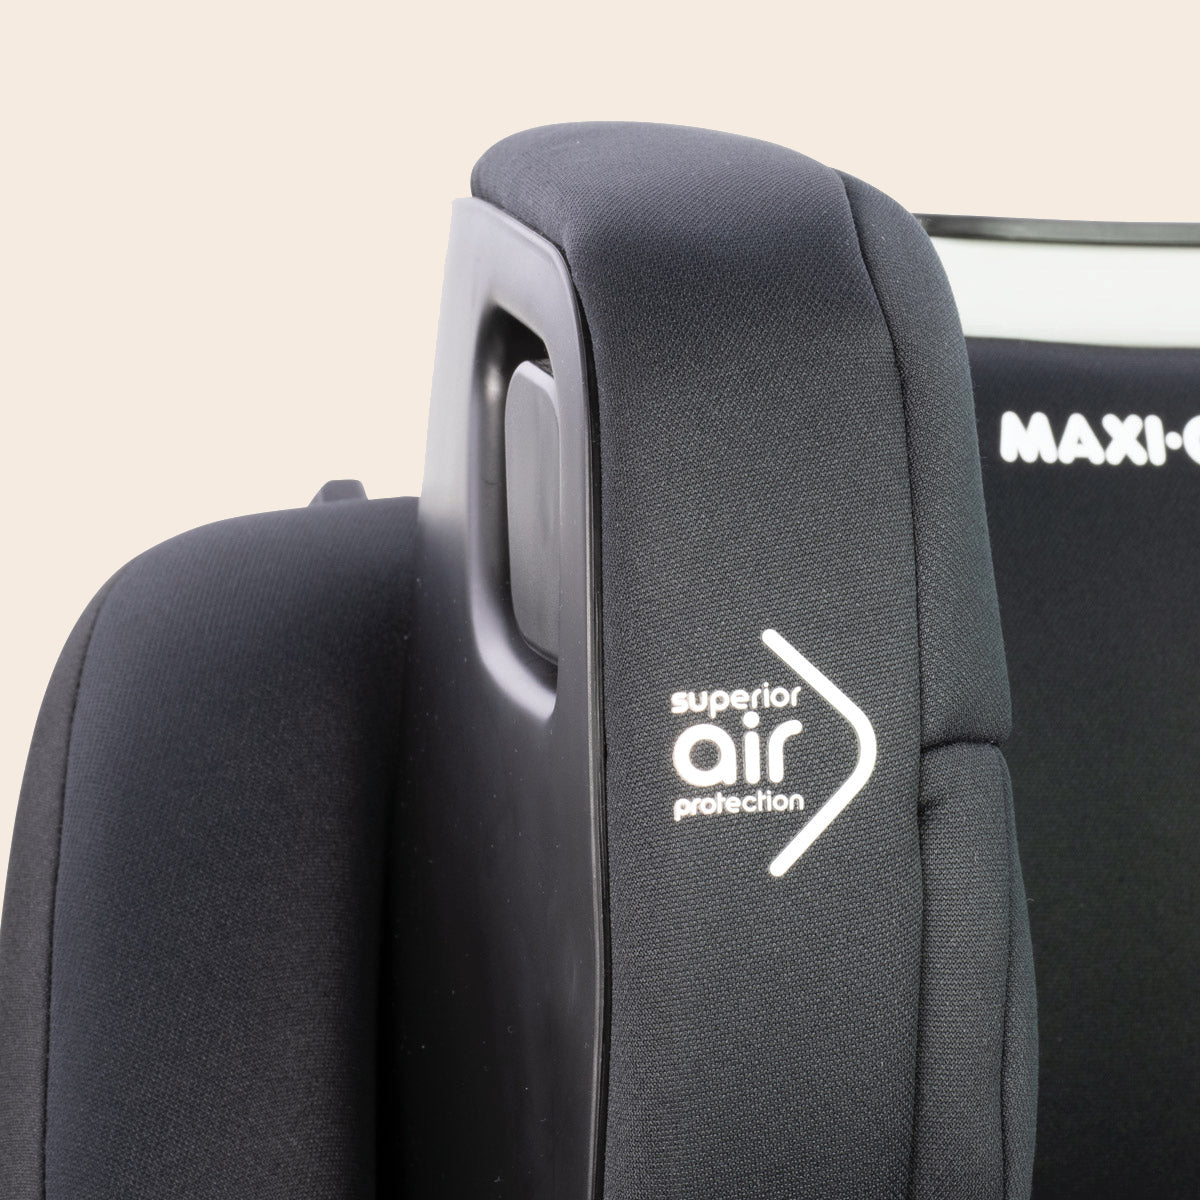 Maxi-Cosi Luna Pro Harnessed Booster Seat